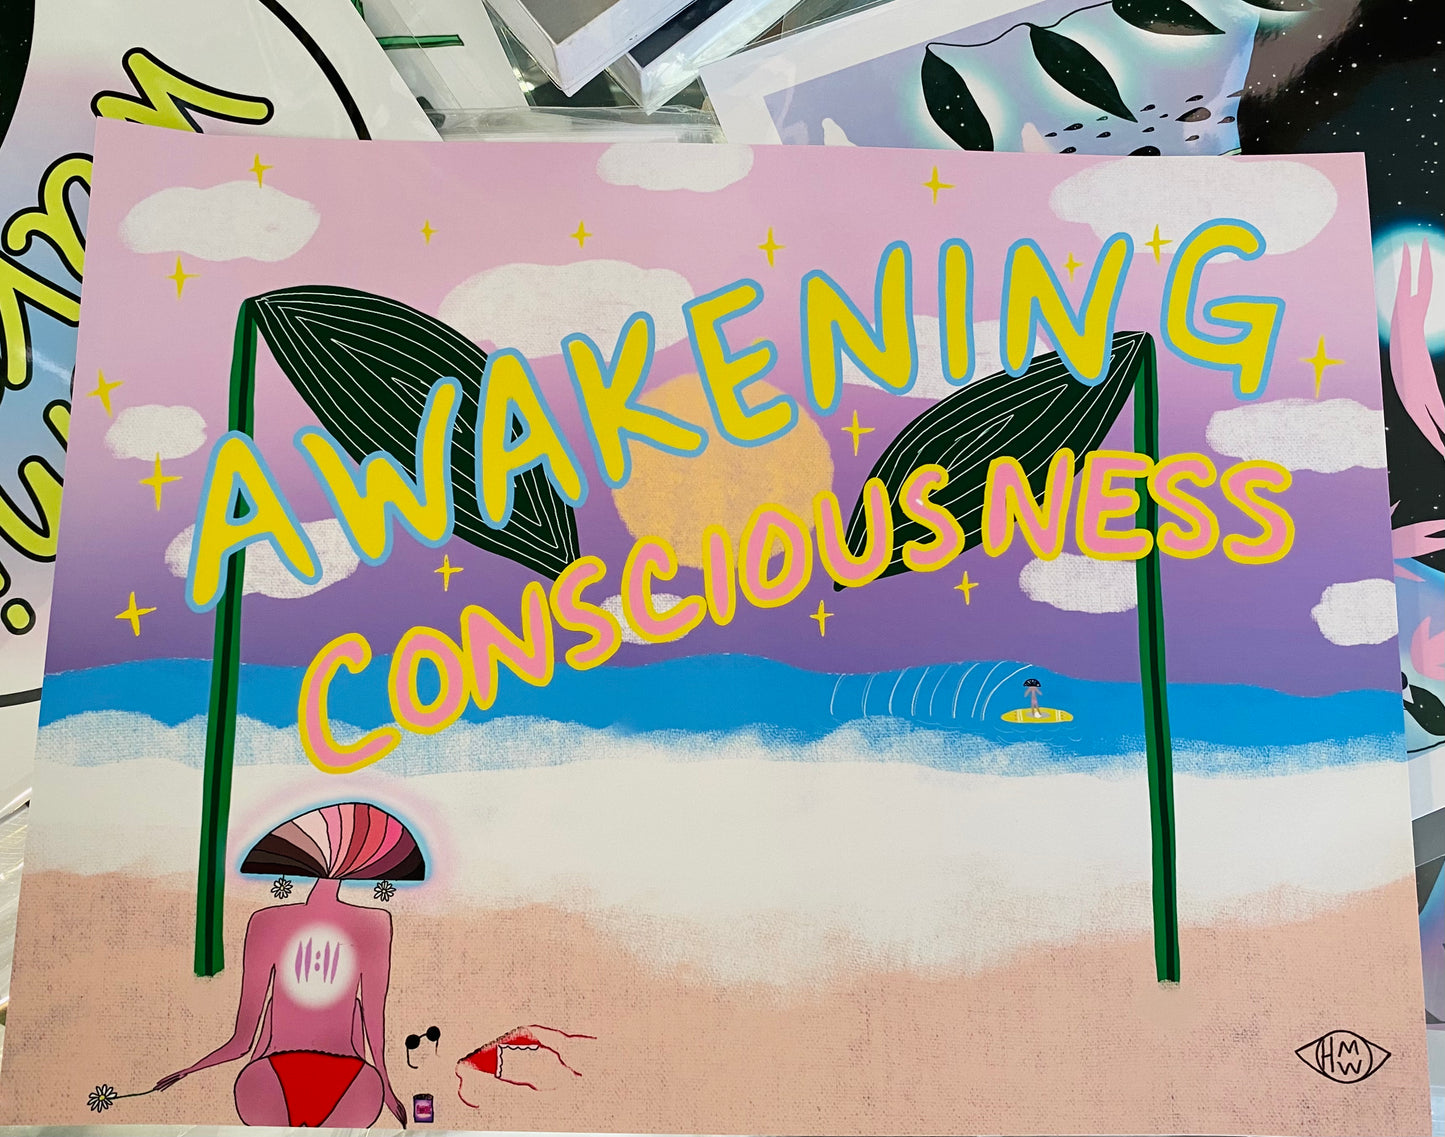 Awakening Consciousness 12x9 Print - Moon Room Shop and Wellness